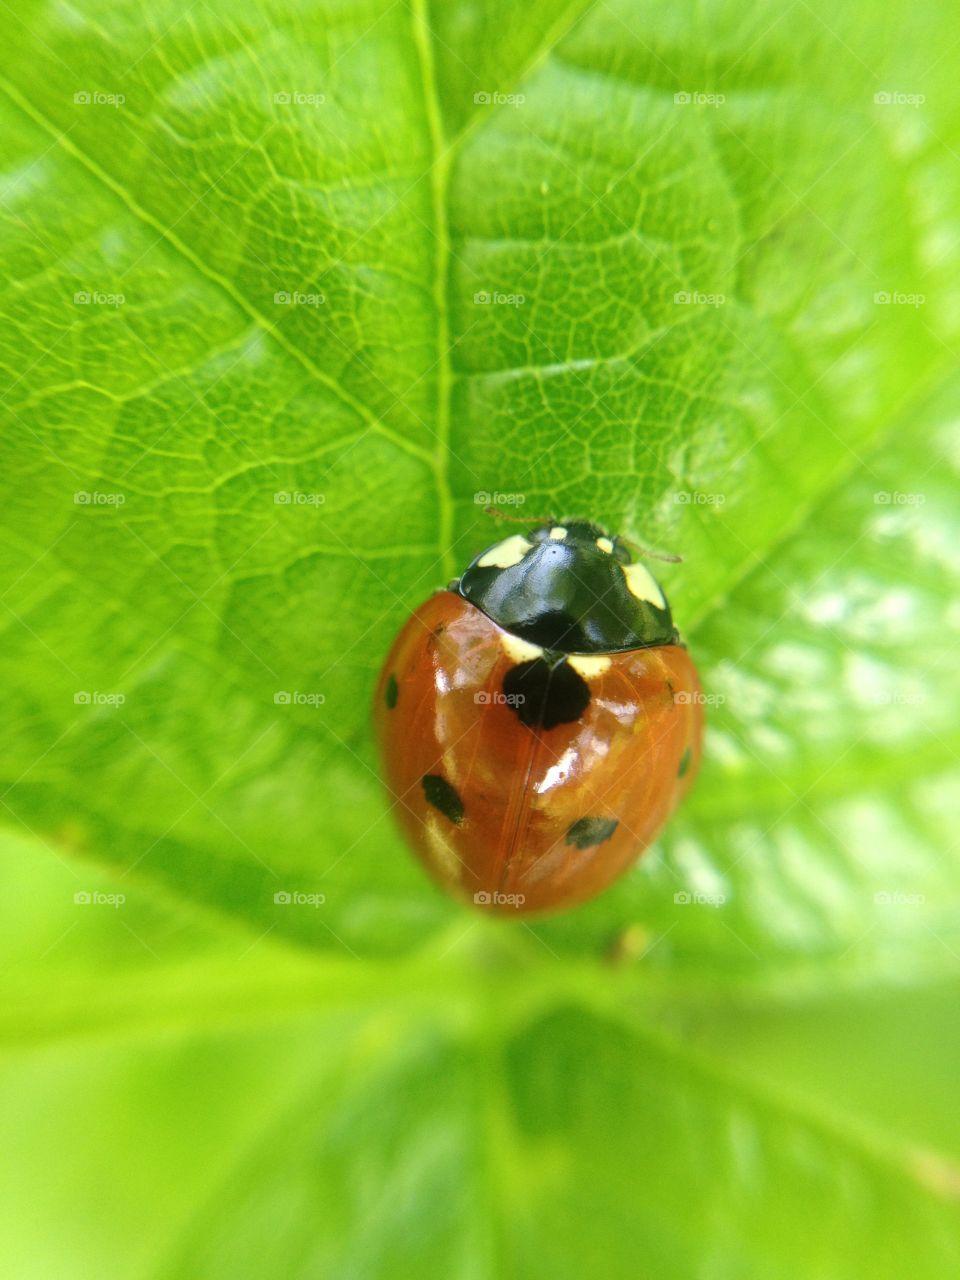 Ladybird on a green leaf- iPhone macro  